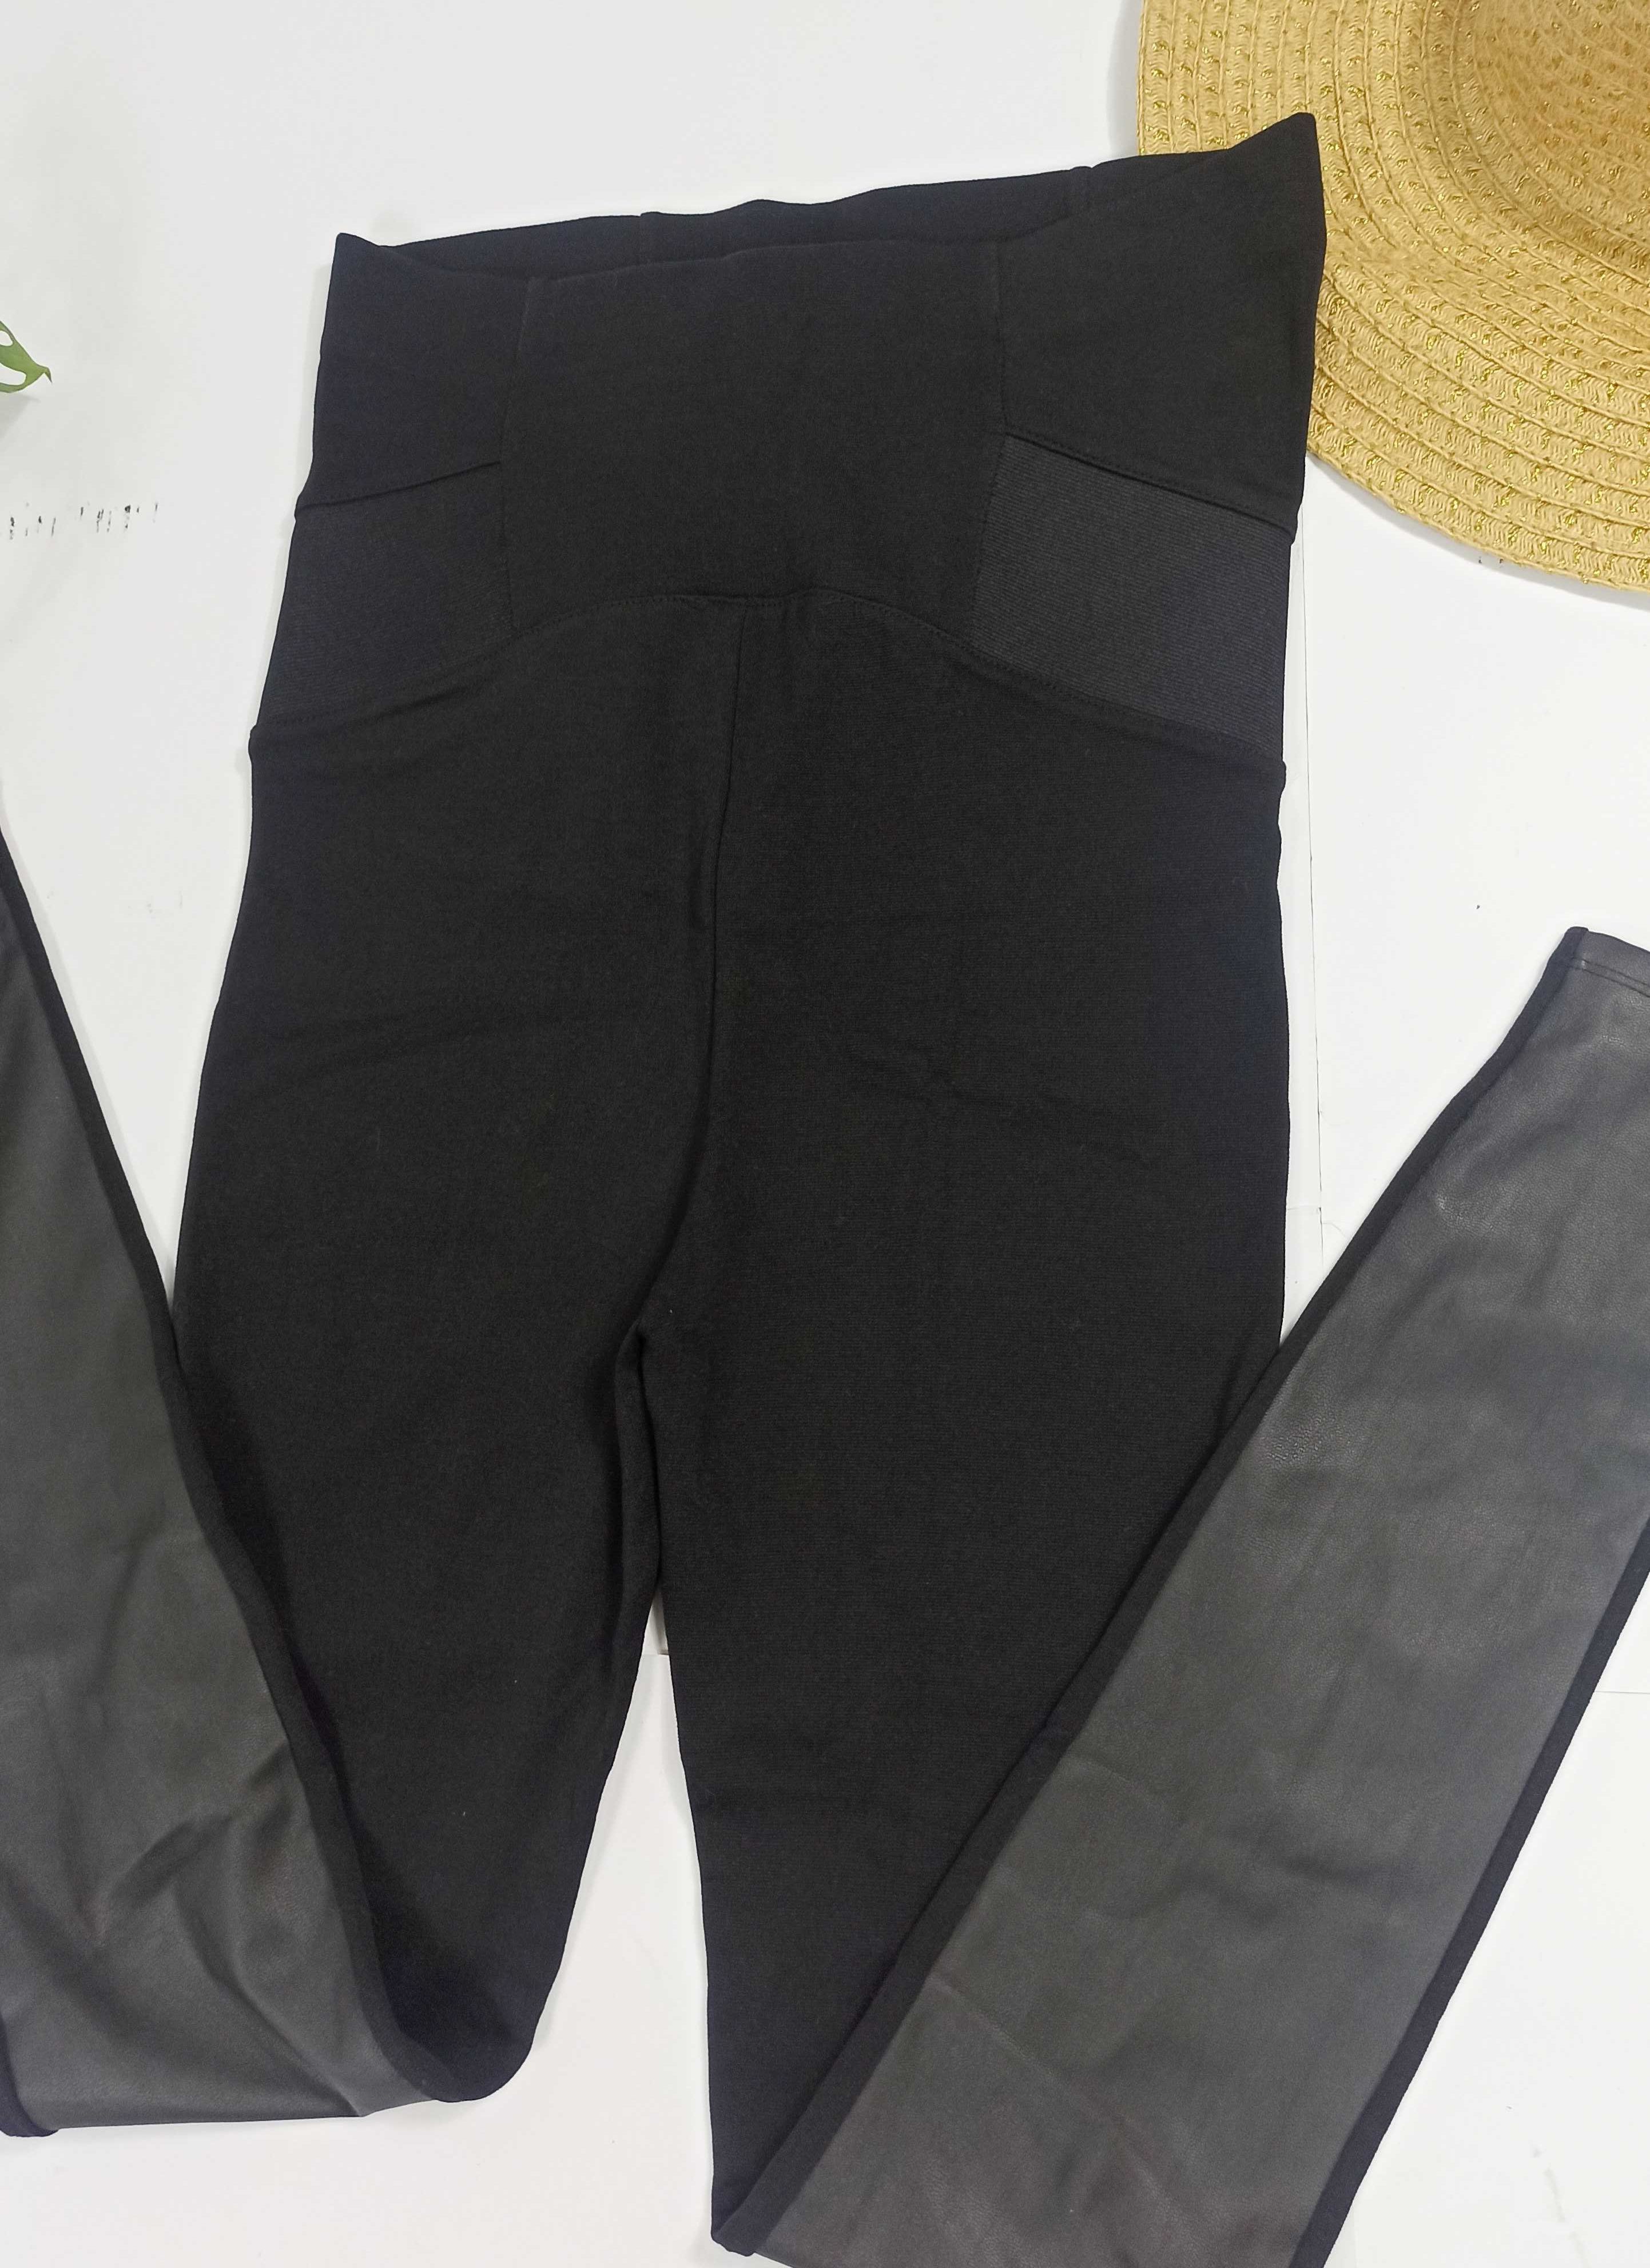 Grubsze czarne skórzane legginsy ciążowe tregginsy ciążowe xs 34 S 36